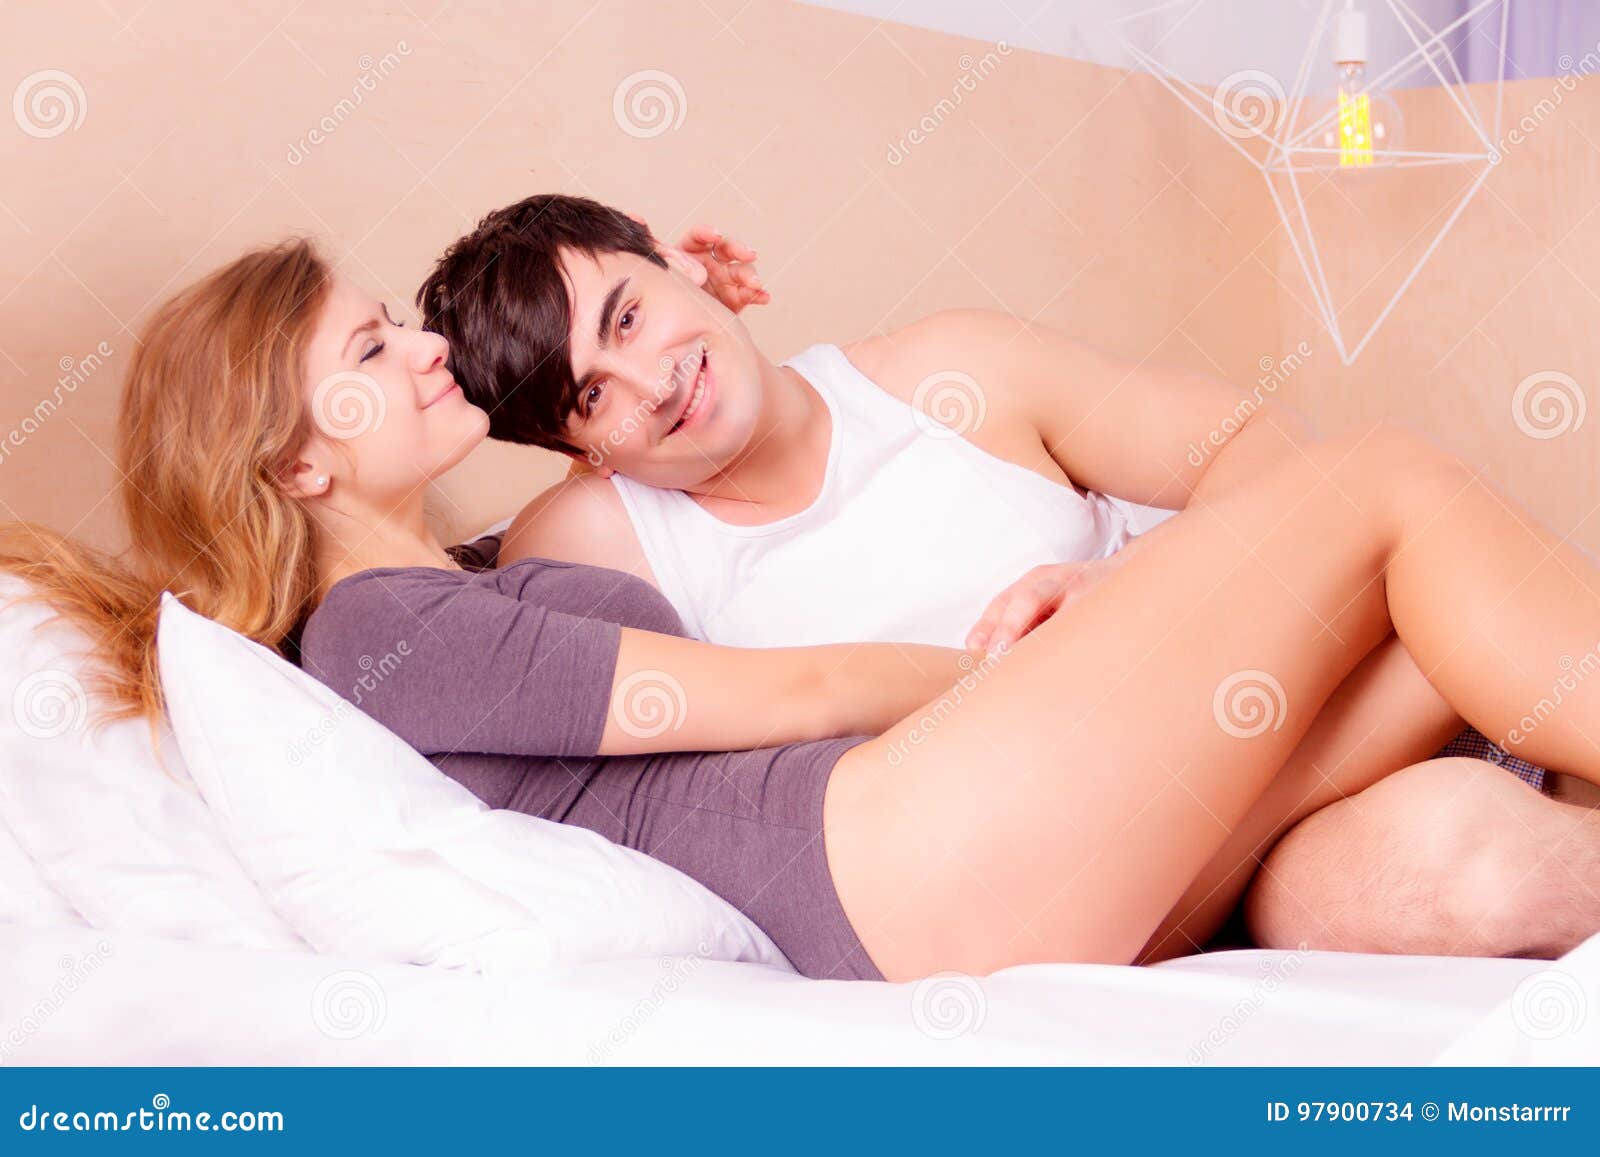 Romantic love on bed